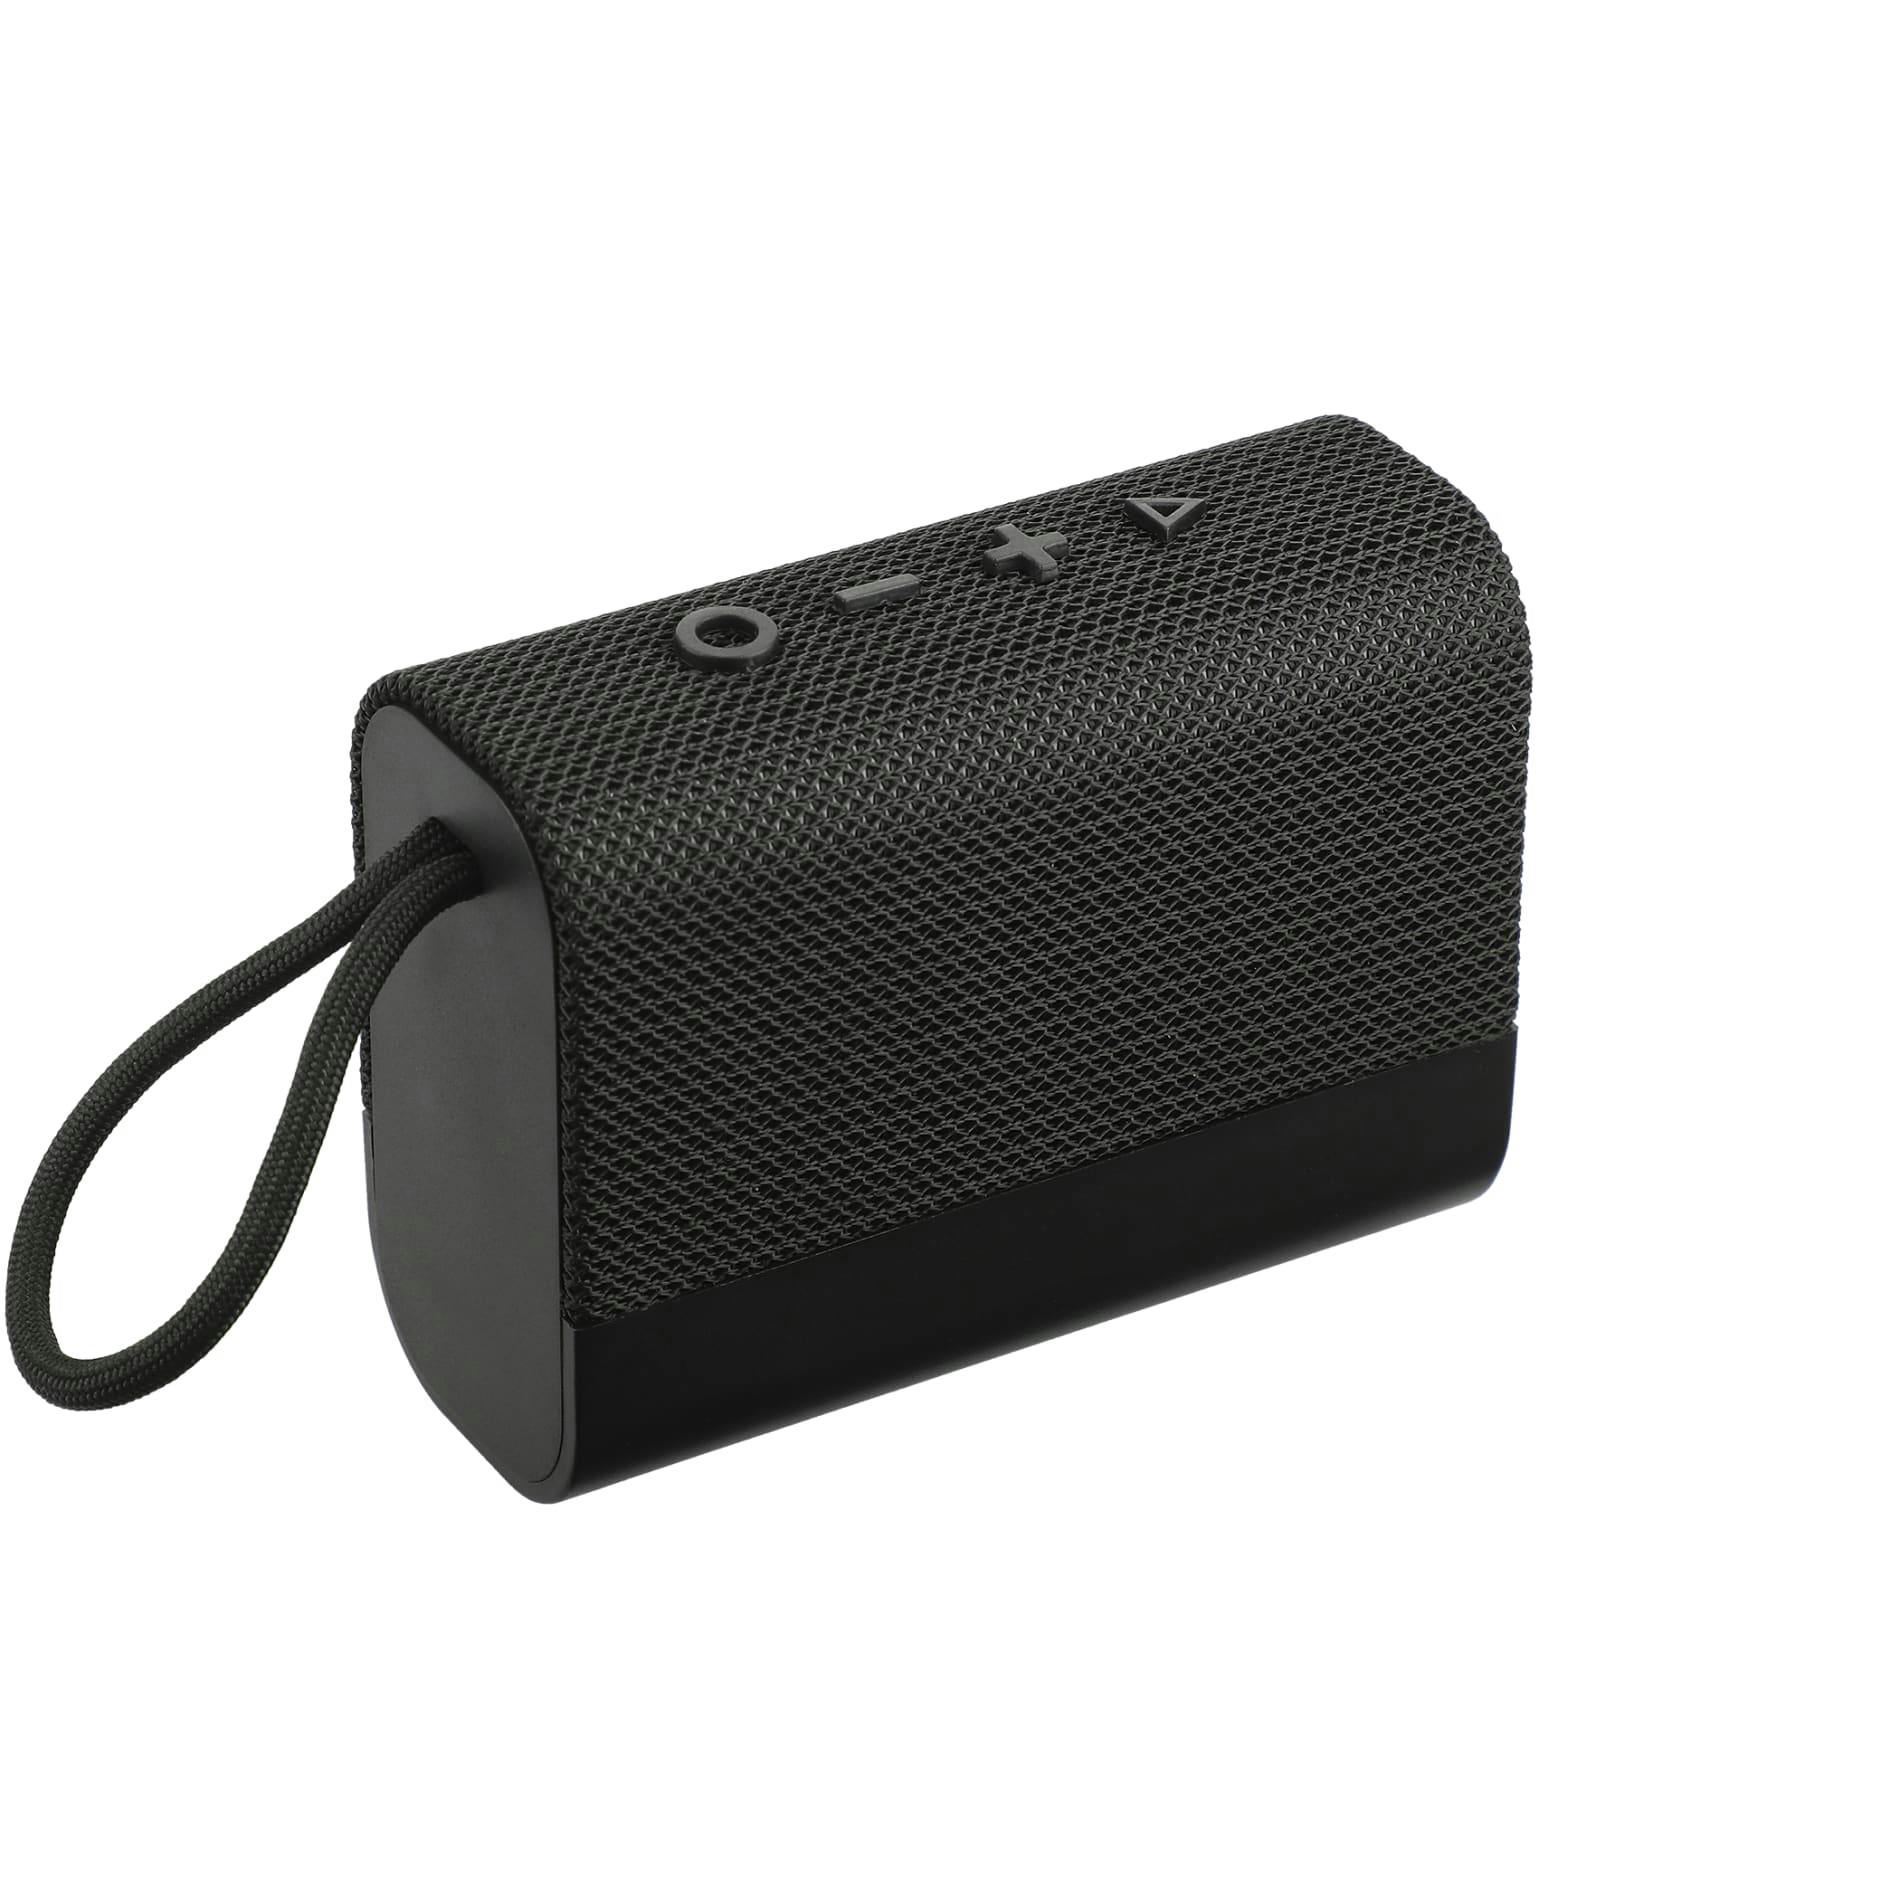 Fabric Banner Waterproof Bluetooth Speaker - additional Image 4